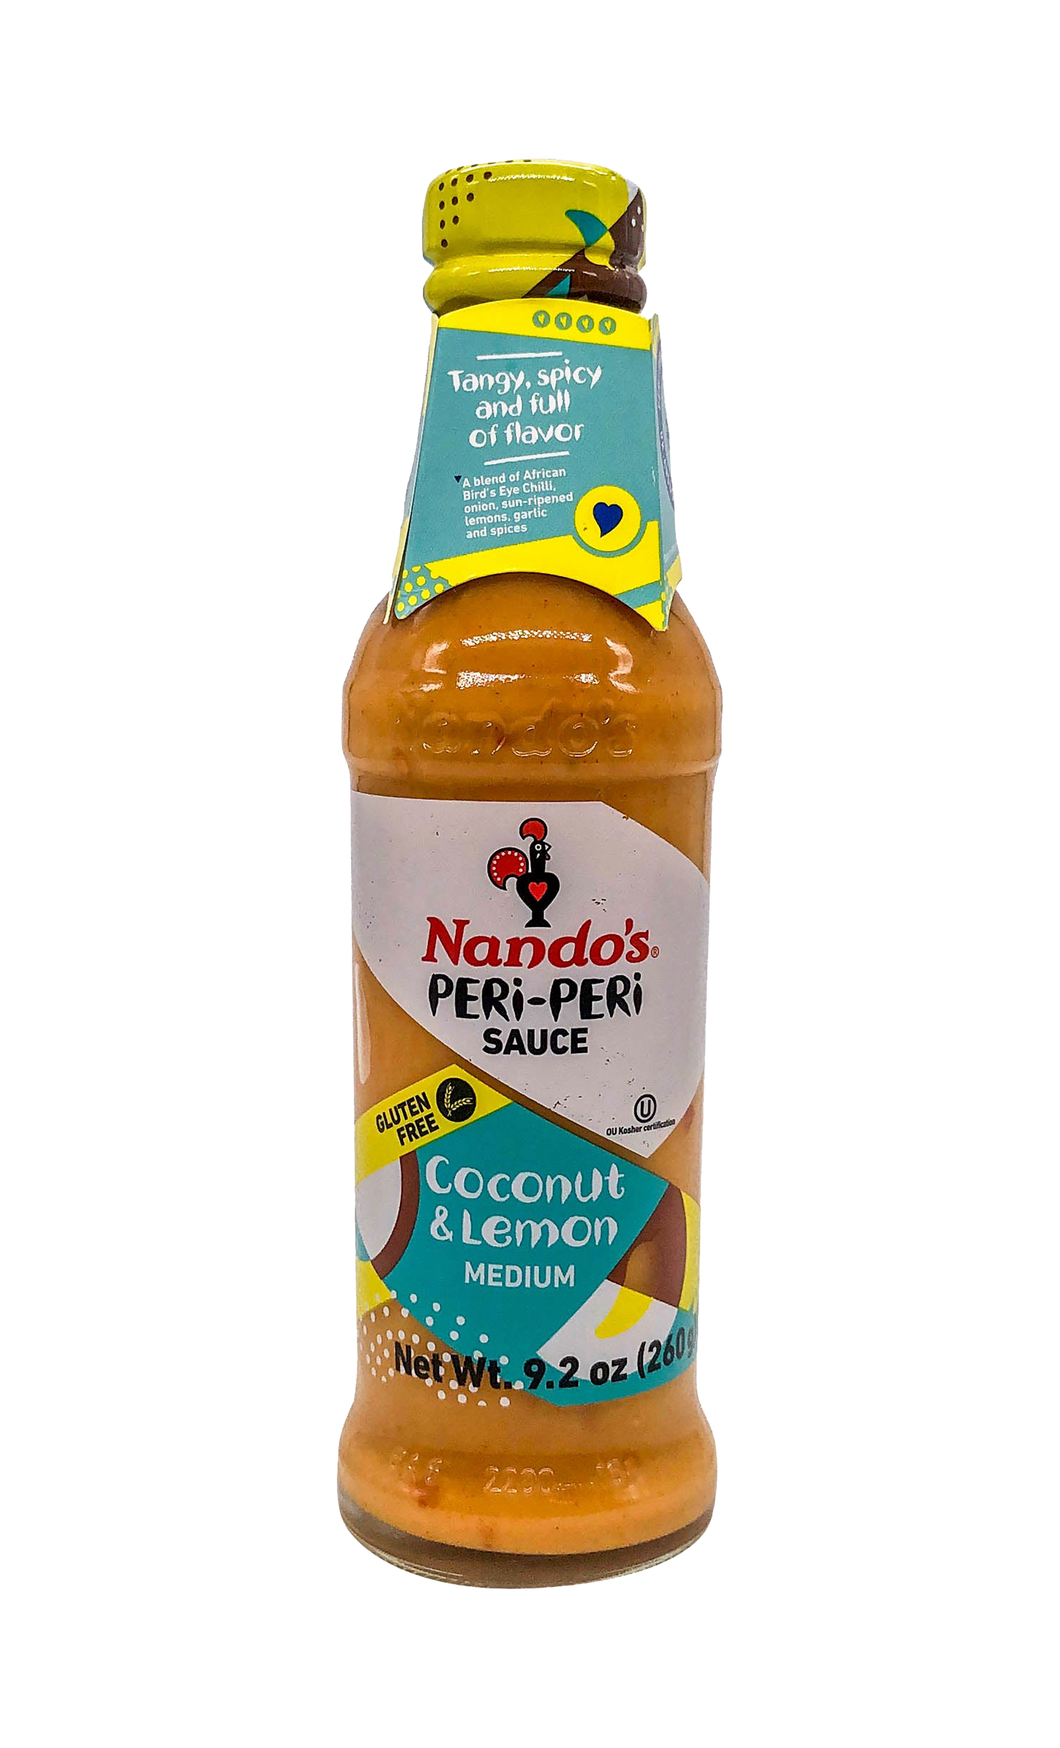 Nando's Peri-Peri Sauce Coconut & Lemon Medium (Gluten Free) 260g